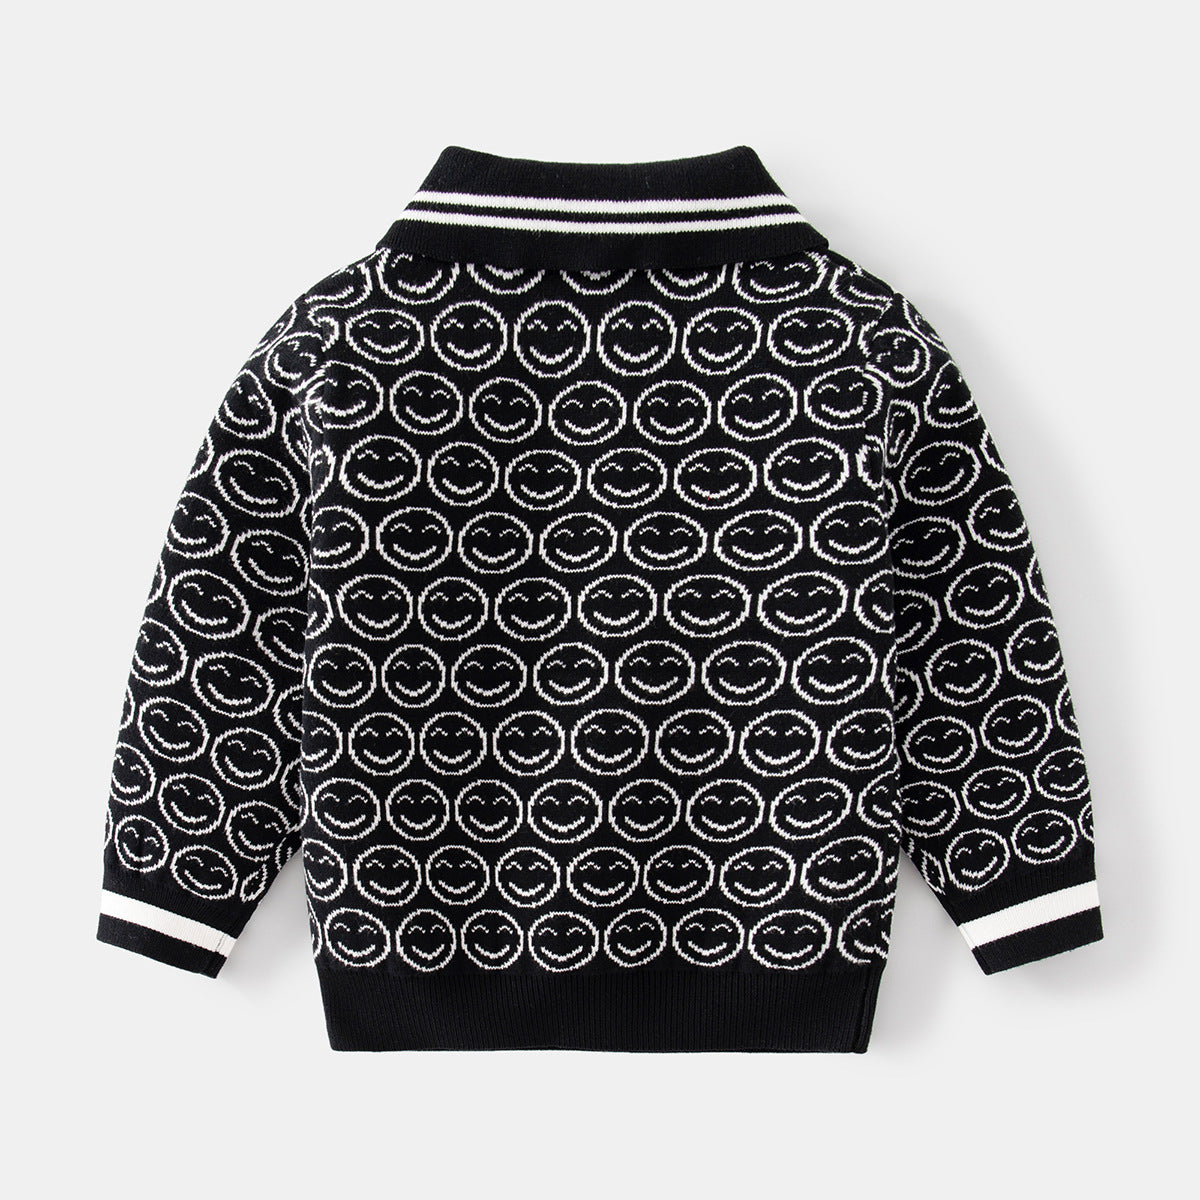 [513650] - Atasan Sweater Polo Kerah Lengan Panjang Import Anak Laki-Laki - Motif Round Smile